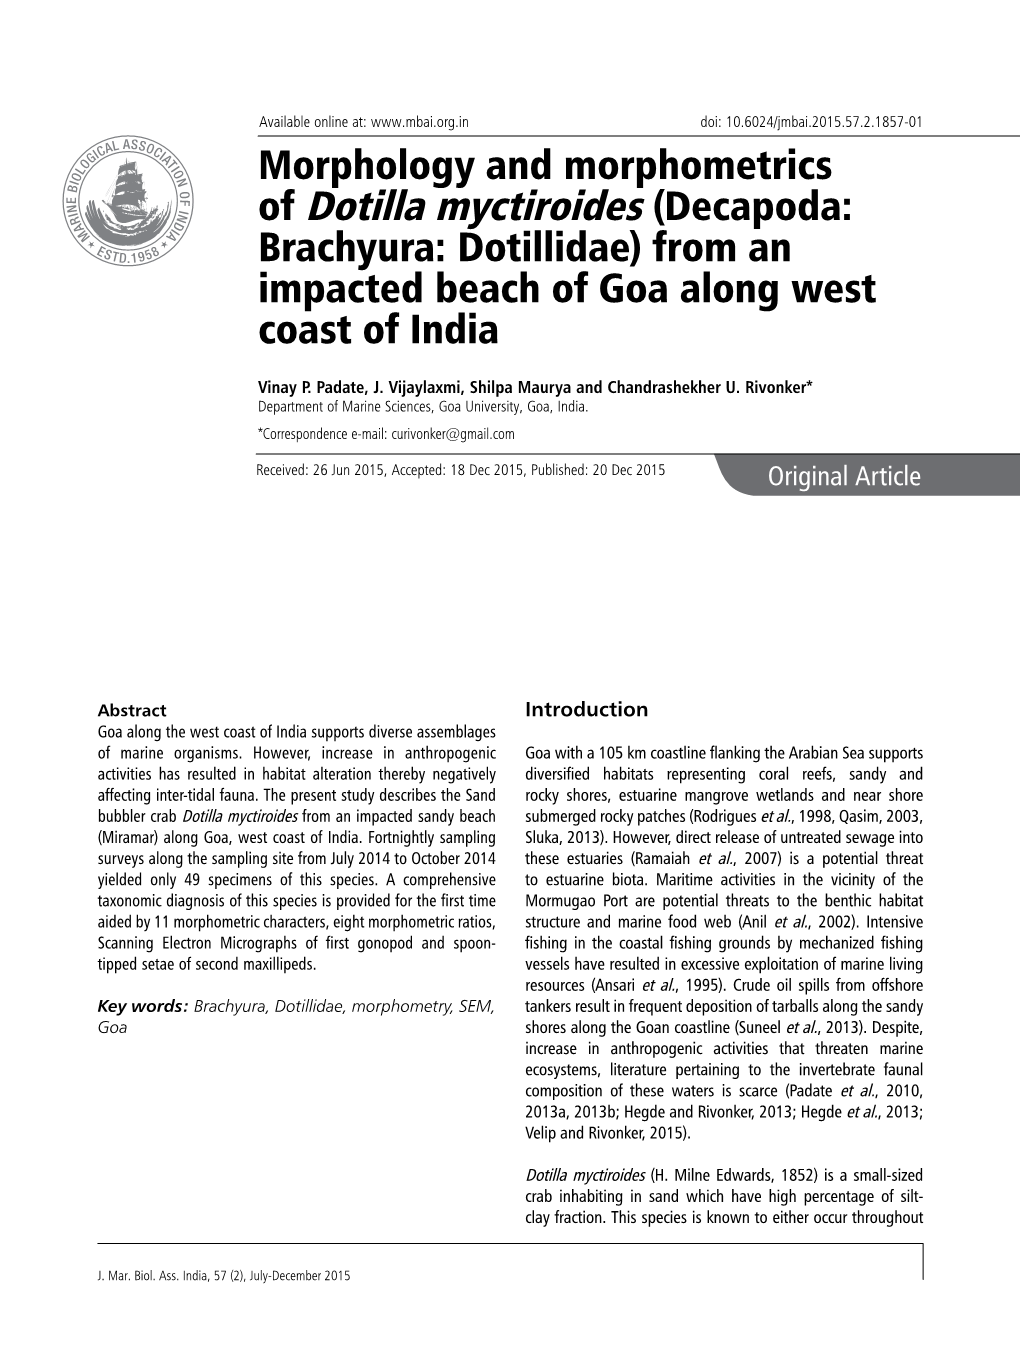 Of Dotilla Myctiroides (Decapoda: Brachyura: Dotillidae) from an Impacted Beach of Goa Along West Coast of India